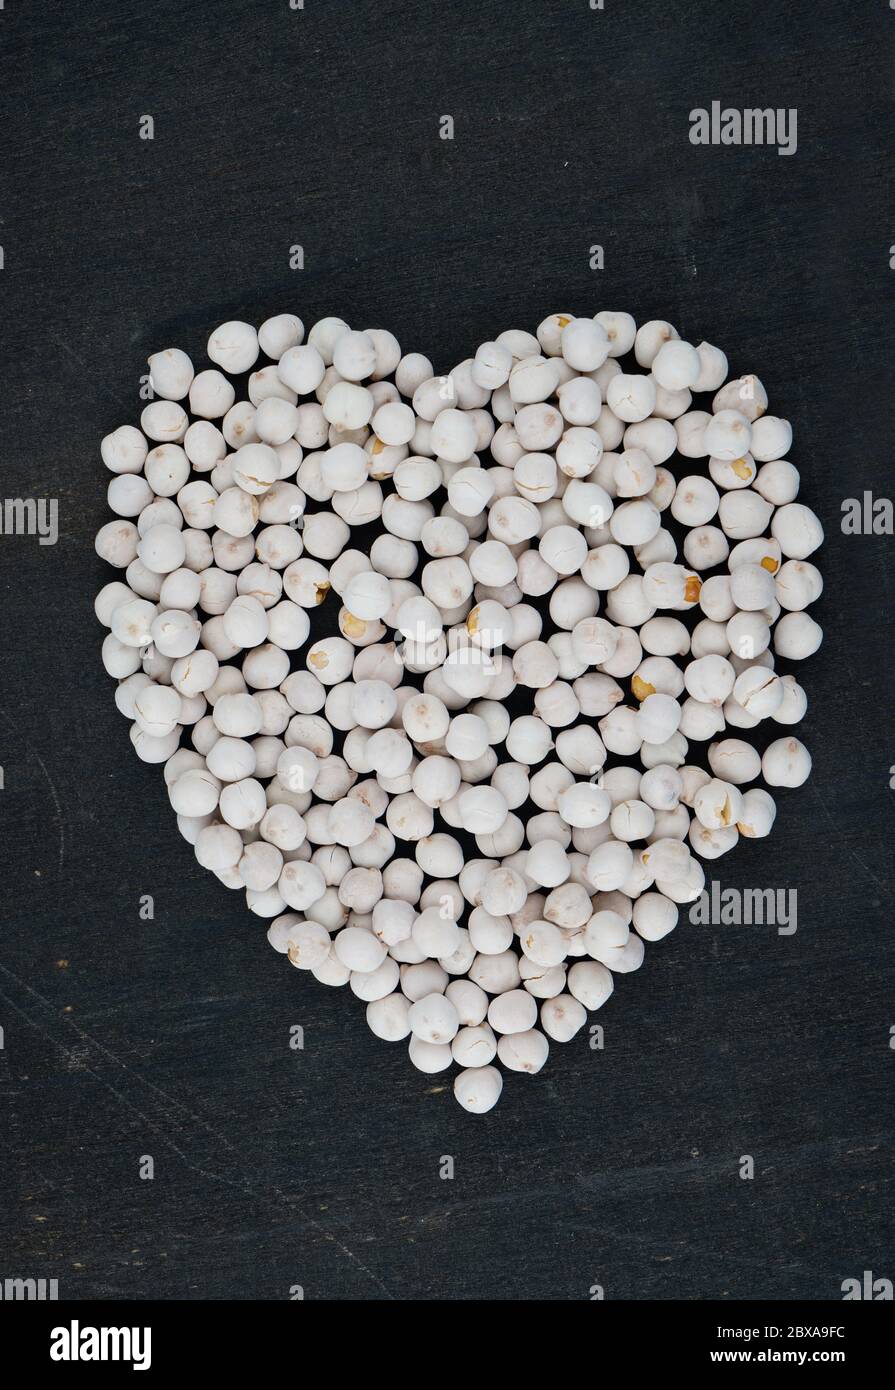 Heart shaped white roasted chickpeas on black background Stock Photo